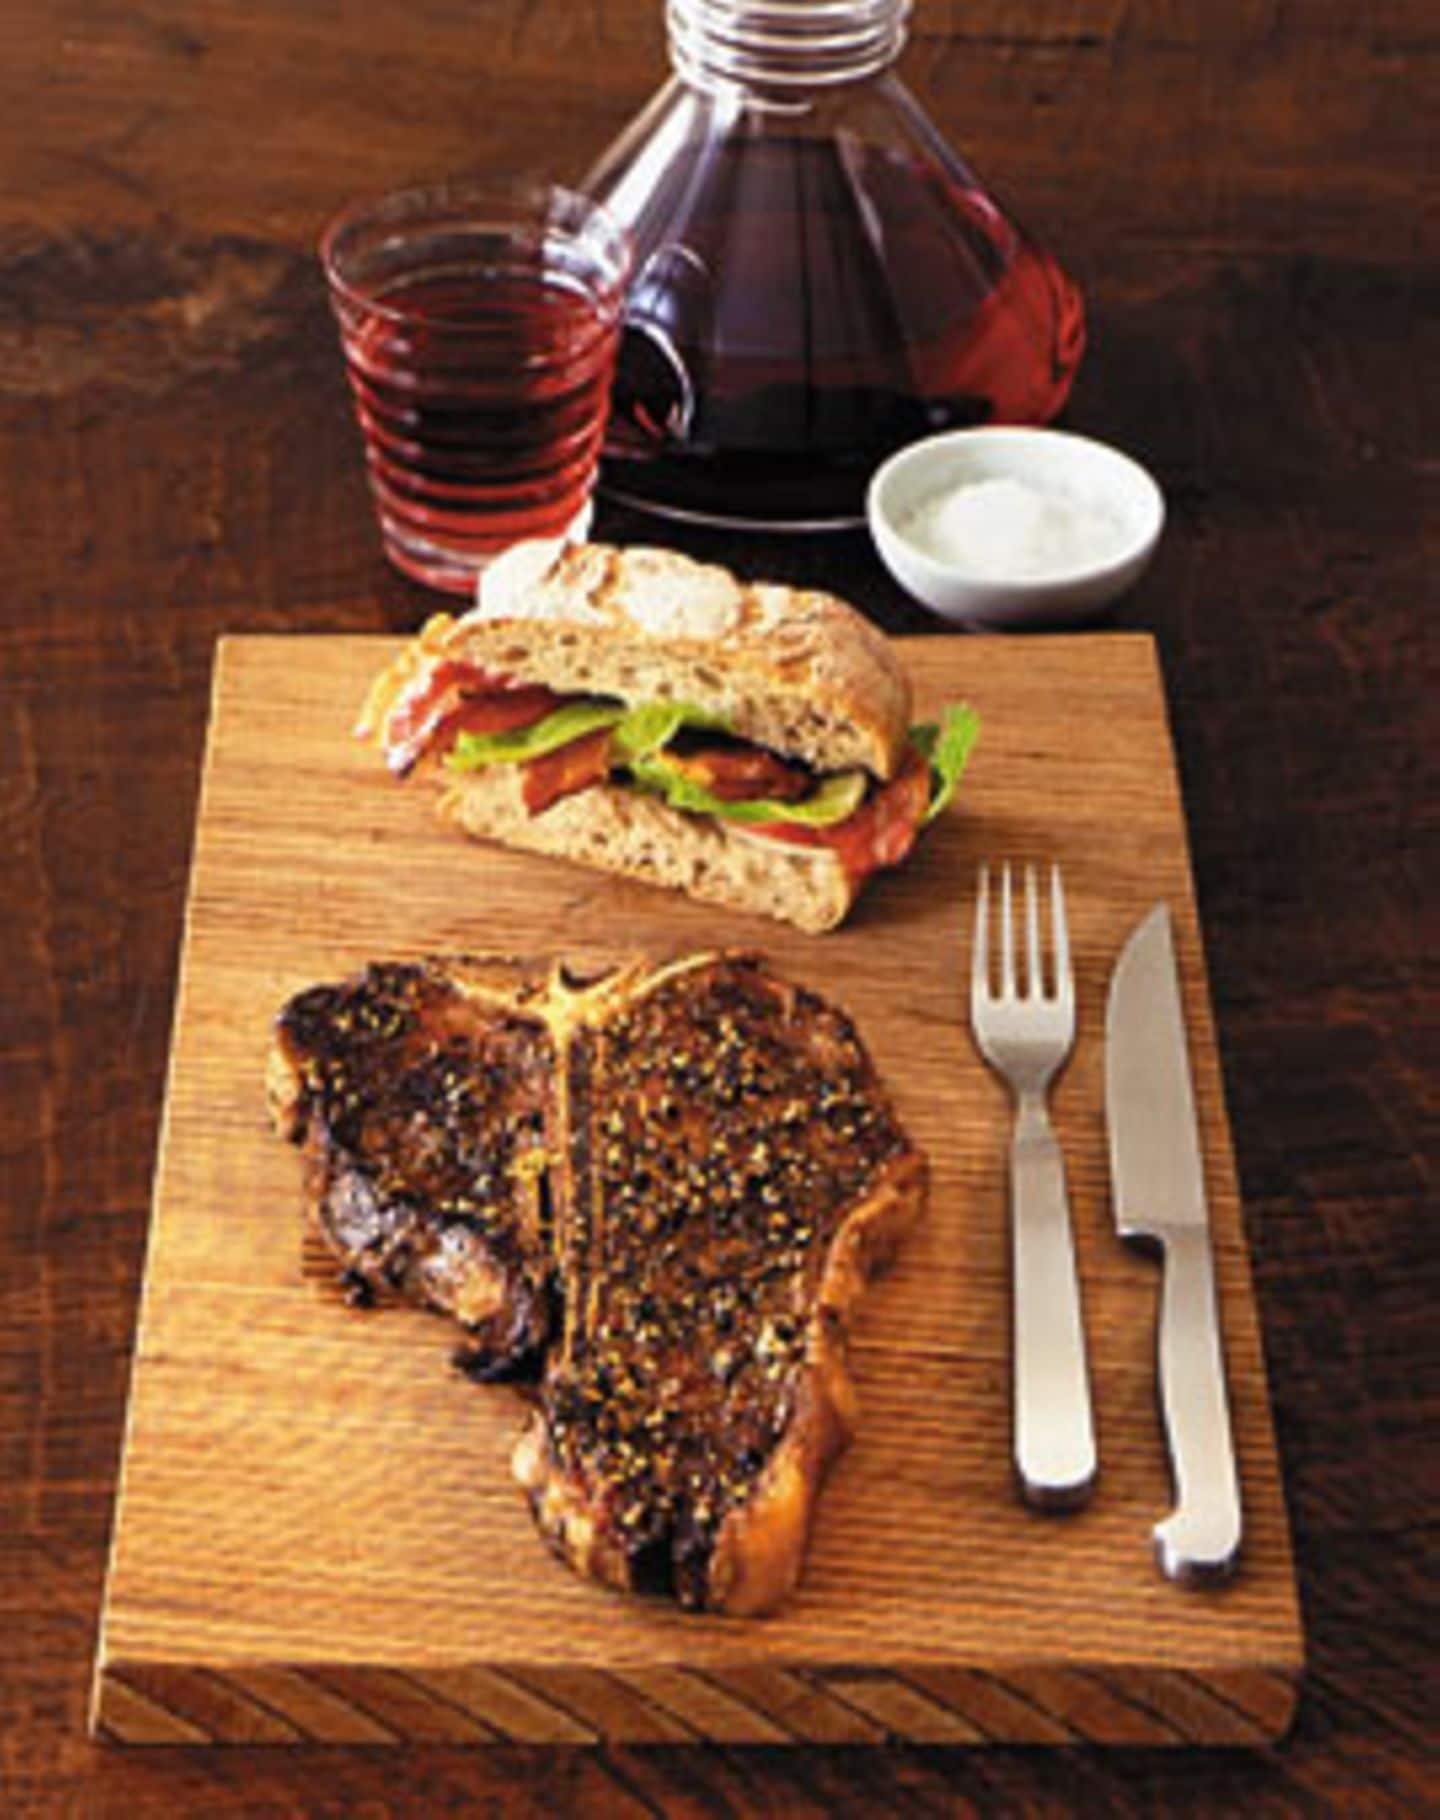 Rezept: Porterhouse-Steak mit Zitronenpfeffer